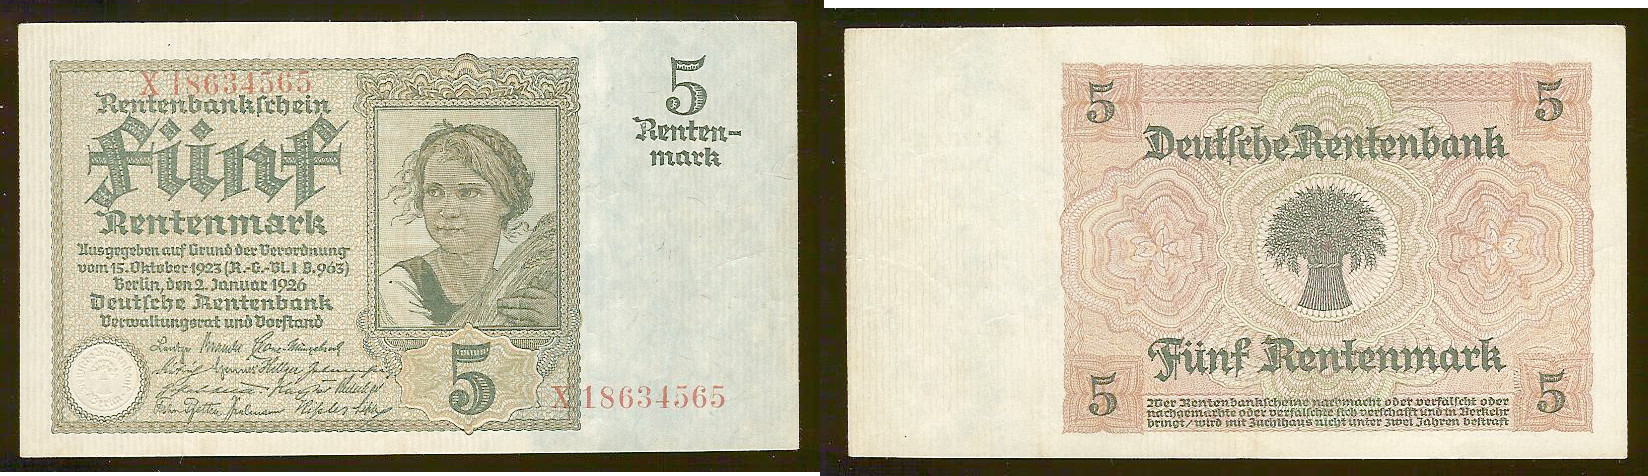 5 Rentenmark ALLEMAGNE 1926 P.169 SUP